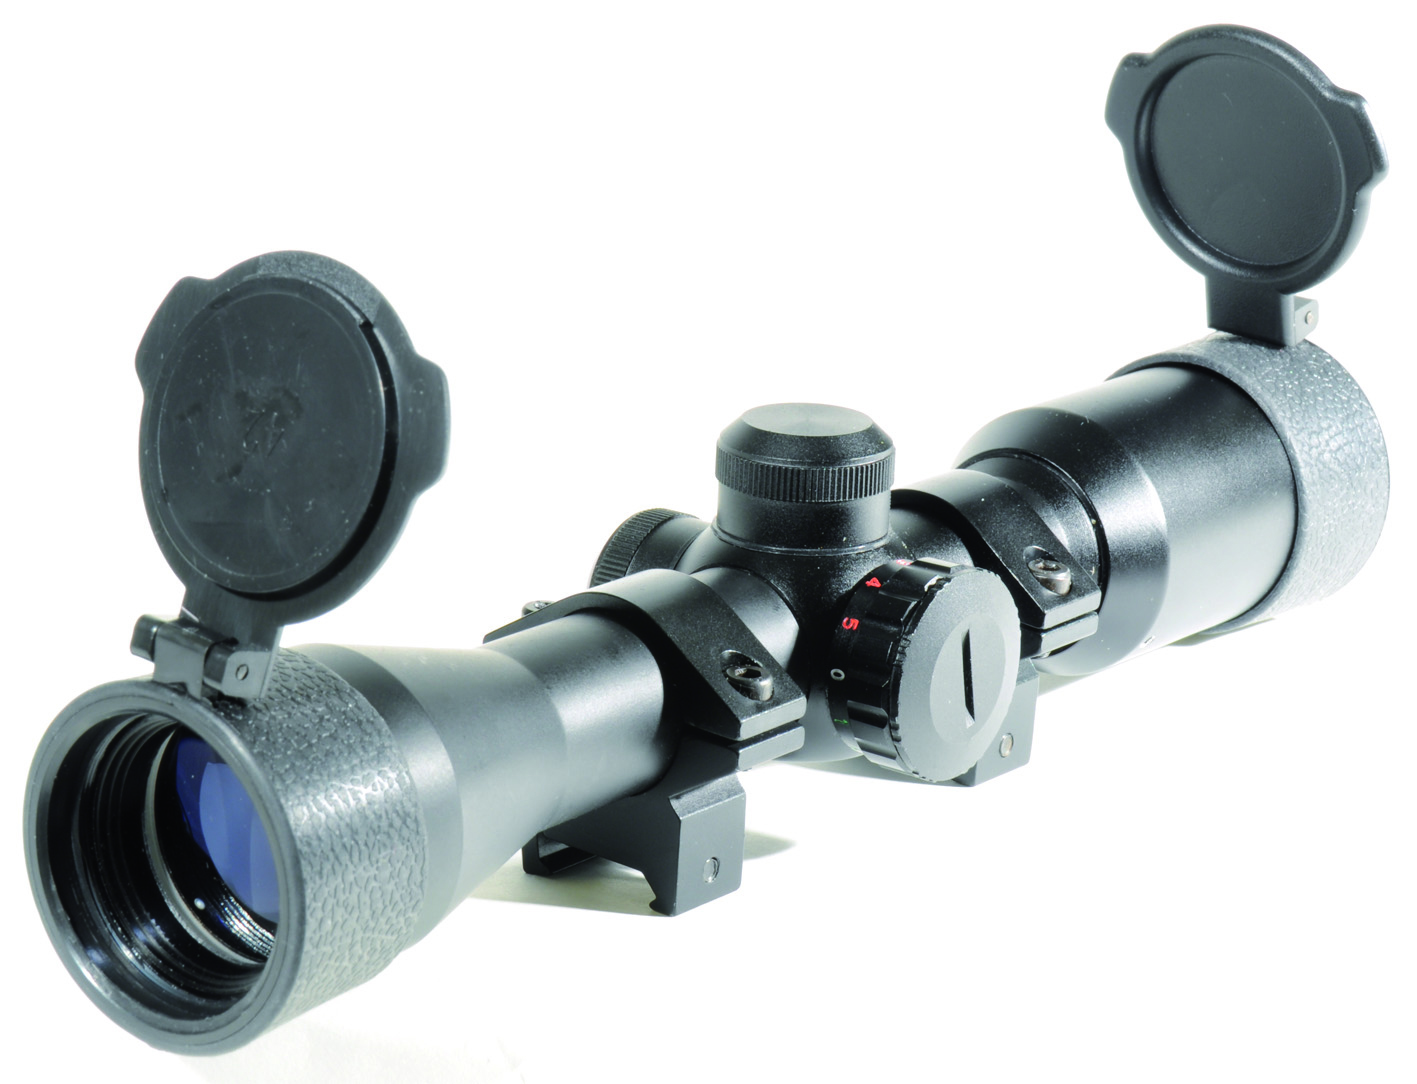 X 32 10 5. Swiss Arms 4-20 прицел. Светофильтр для прицела. 4x scope. Magnifier scope.